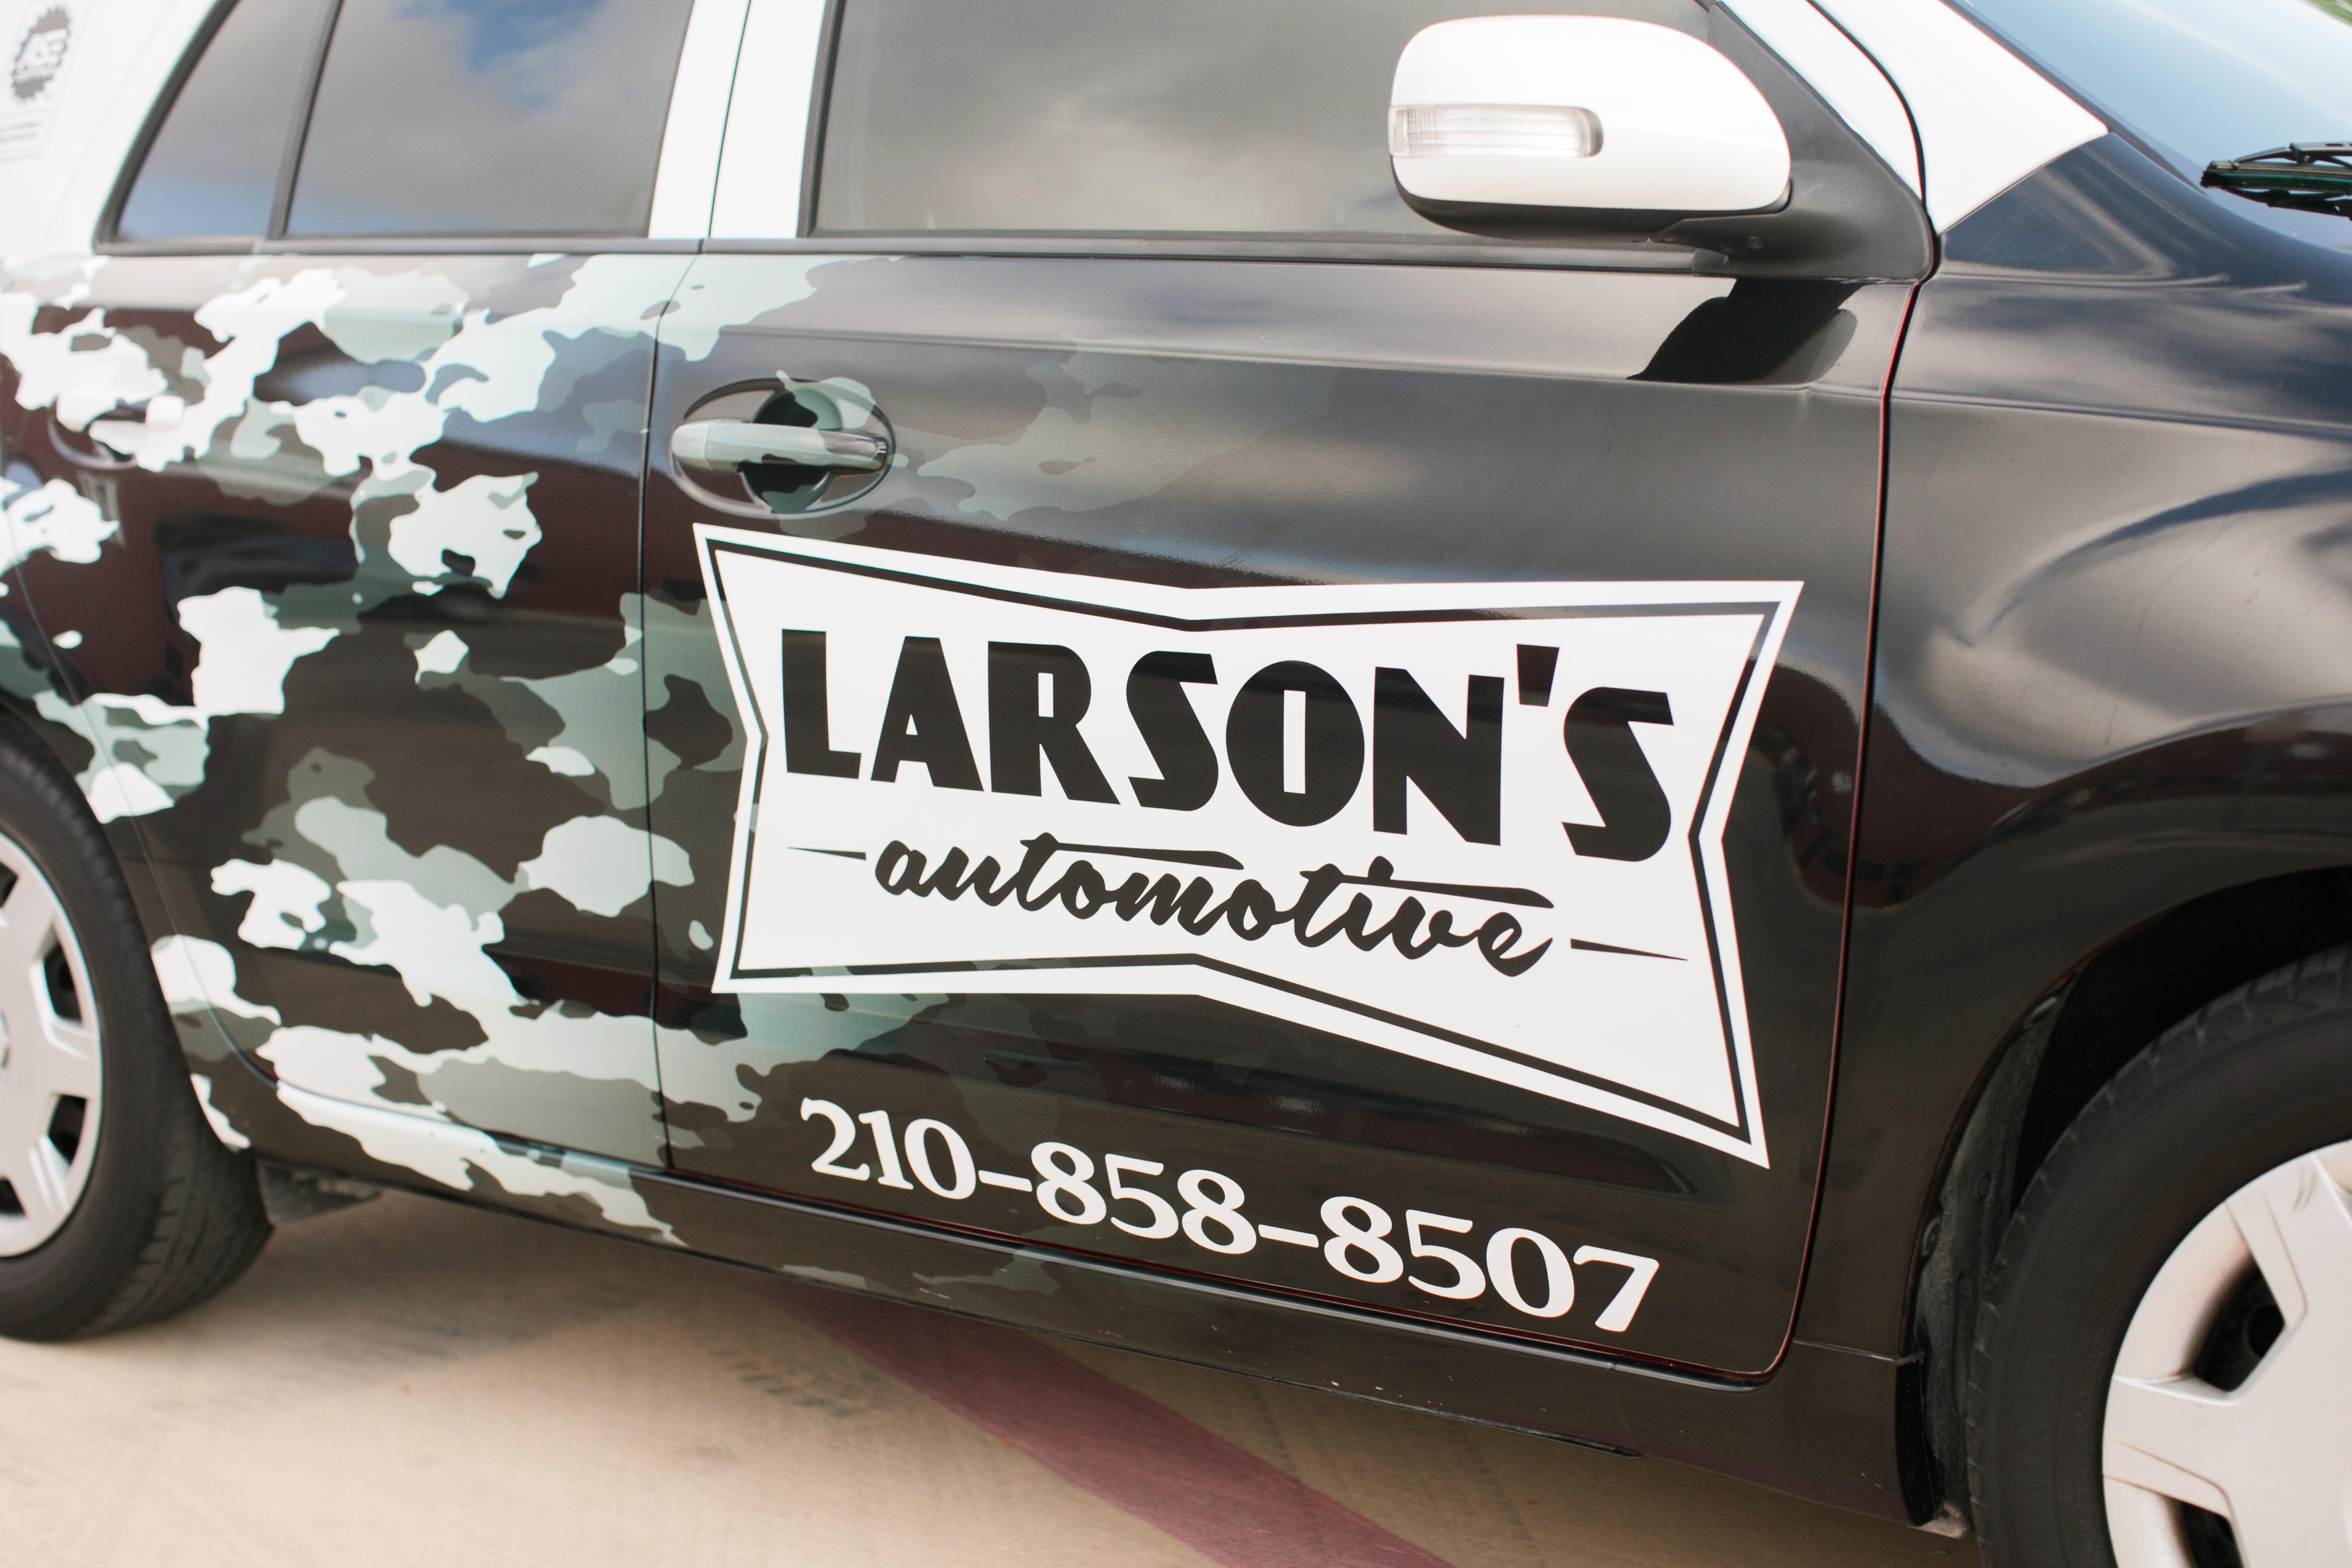 Larson's Automotive Photo